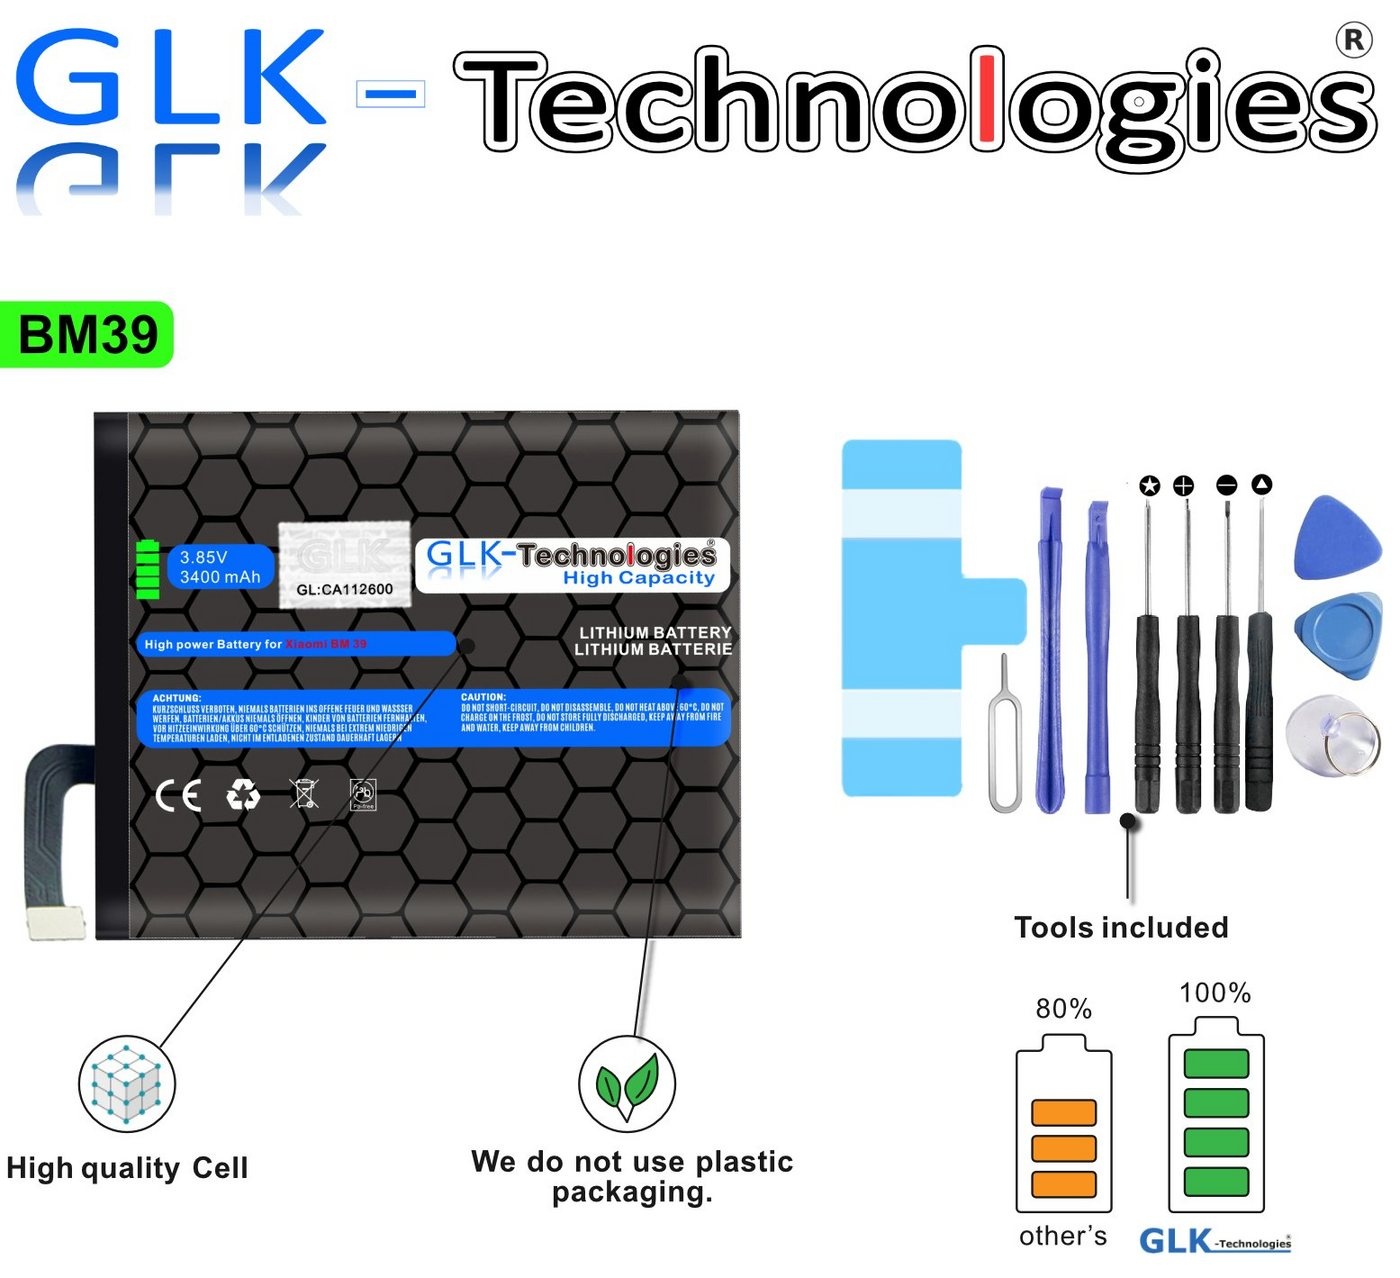 GLK-Technologies High Power Ersatzakku BM39 für Xiaomi Mi6, Original GLK-Technologies Battery, accu, 3400mAh Akku, inkl. Werkzeug Set Kit NEU Smartphone-Akku 3400 mAh (3.8 V)